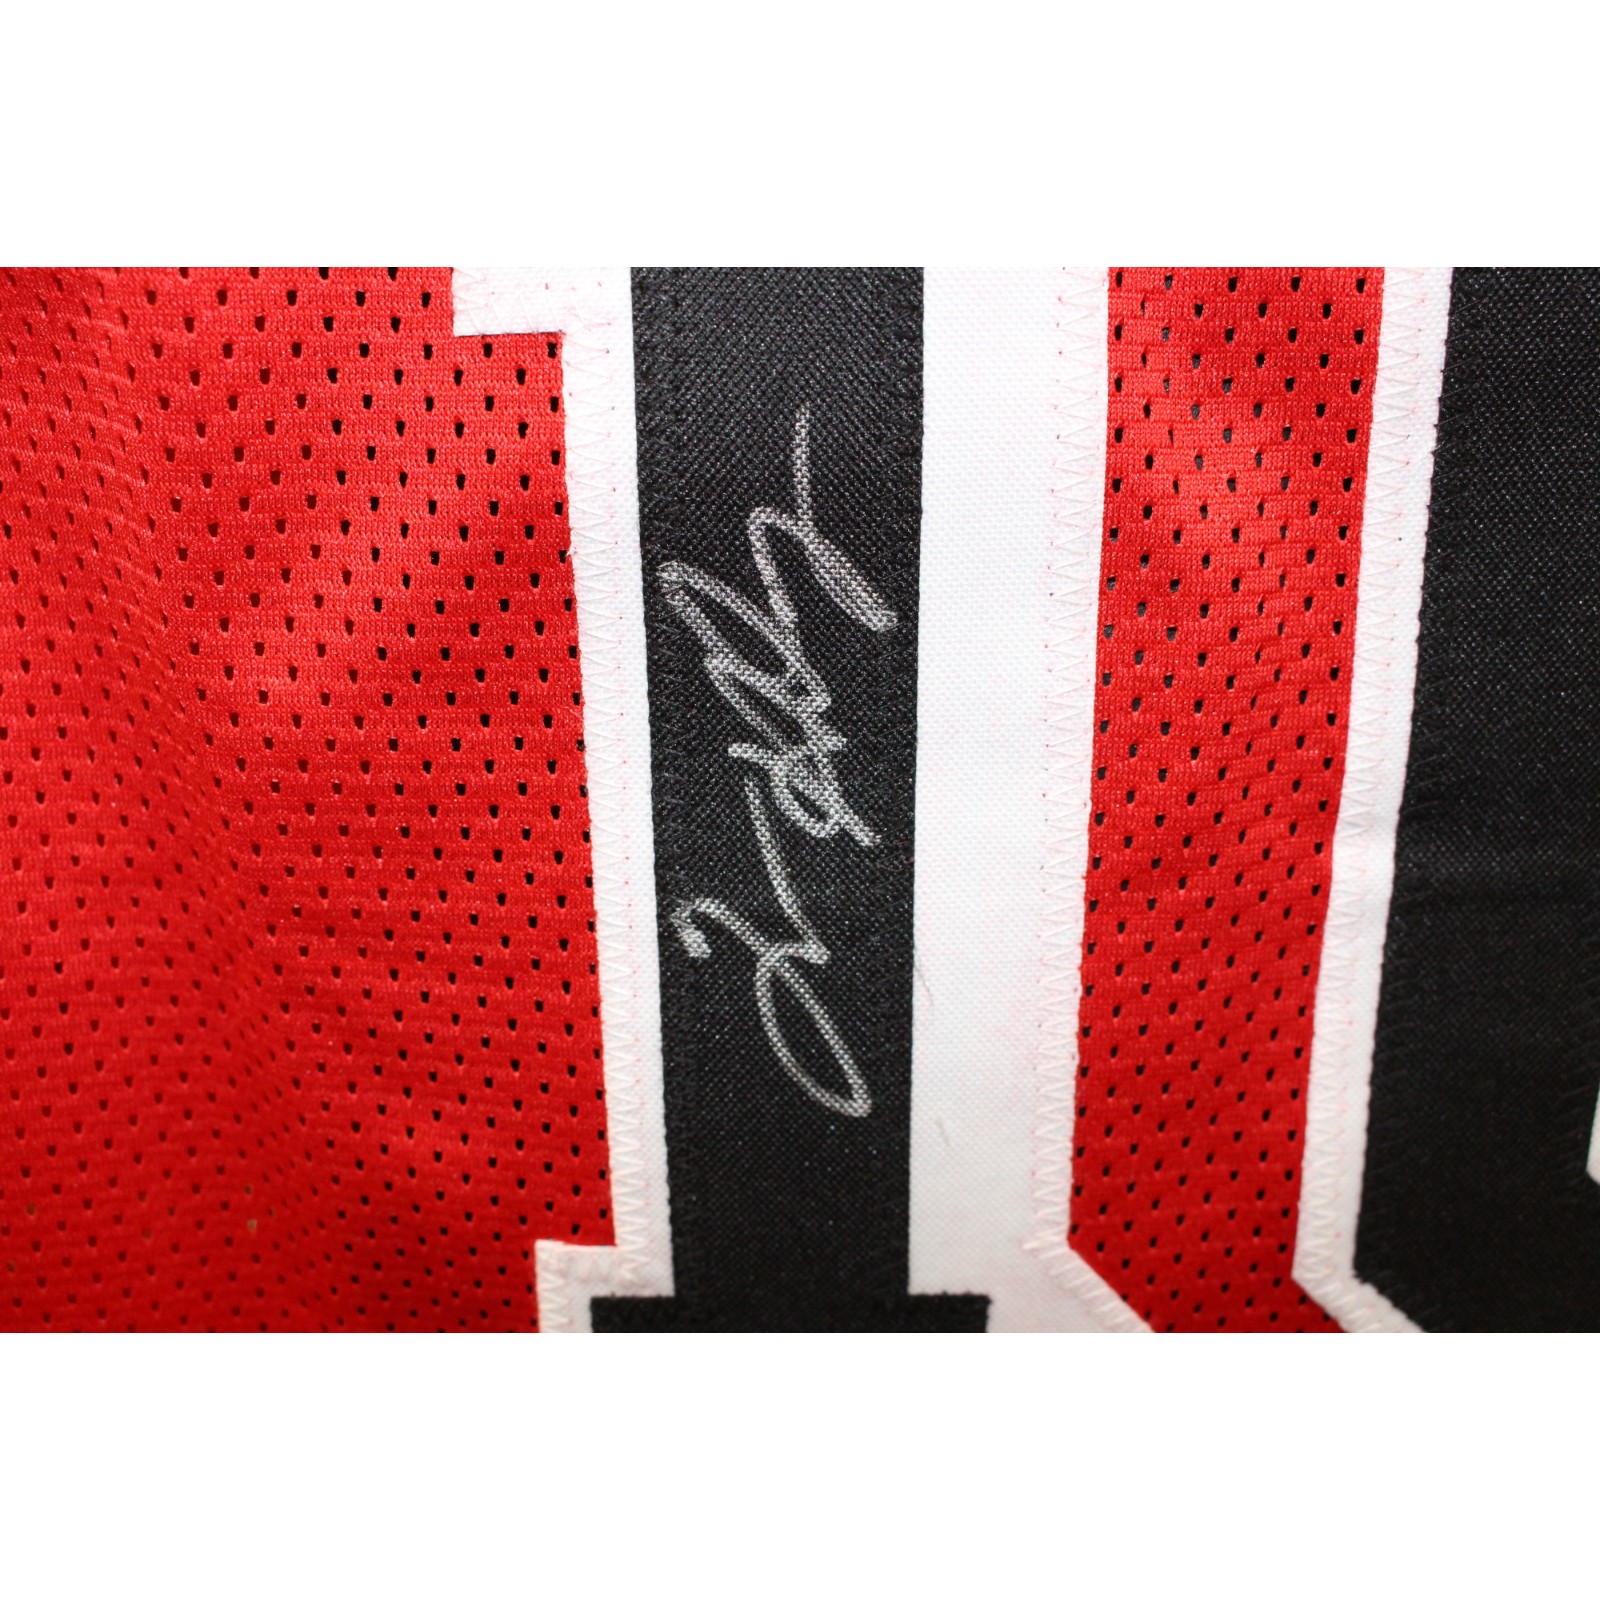 Tim Hardaway Autographed/Signed Pro Style Red Jersey HOF JSA